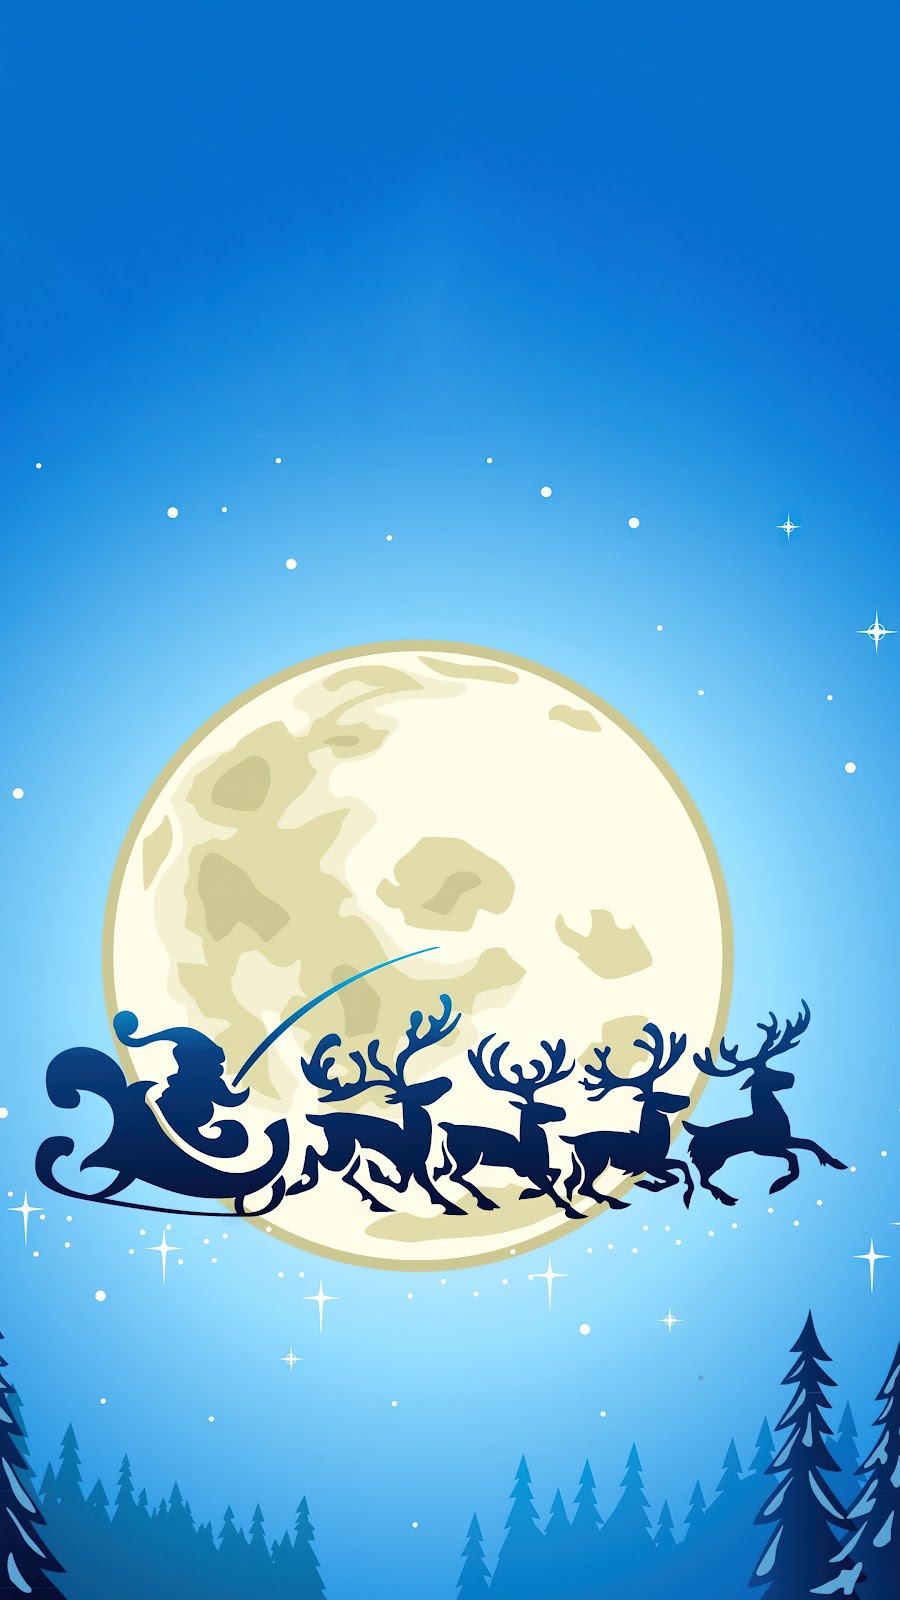 Santa Claus Reindeer Sleigh Christmas